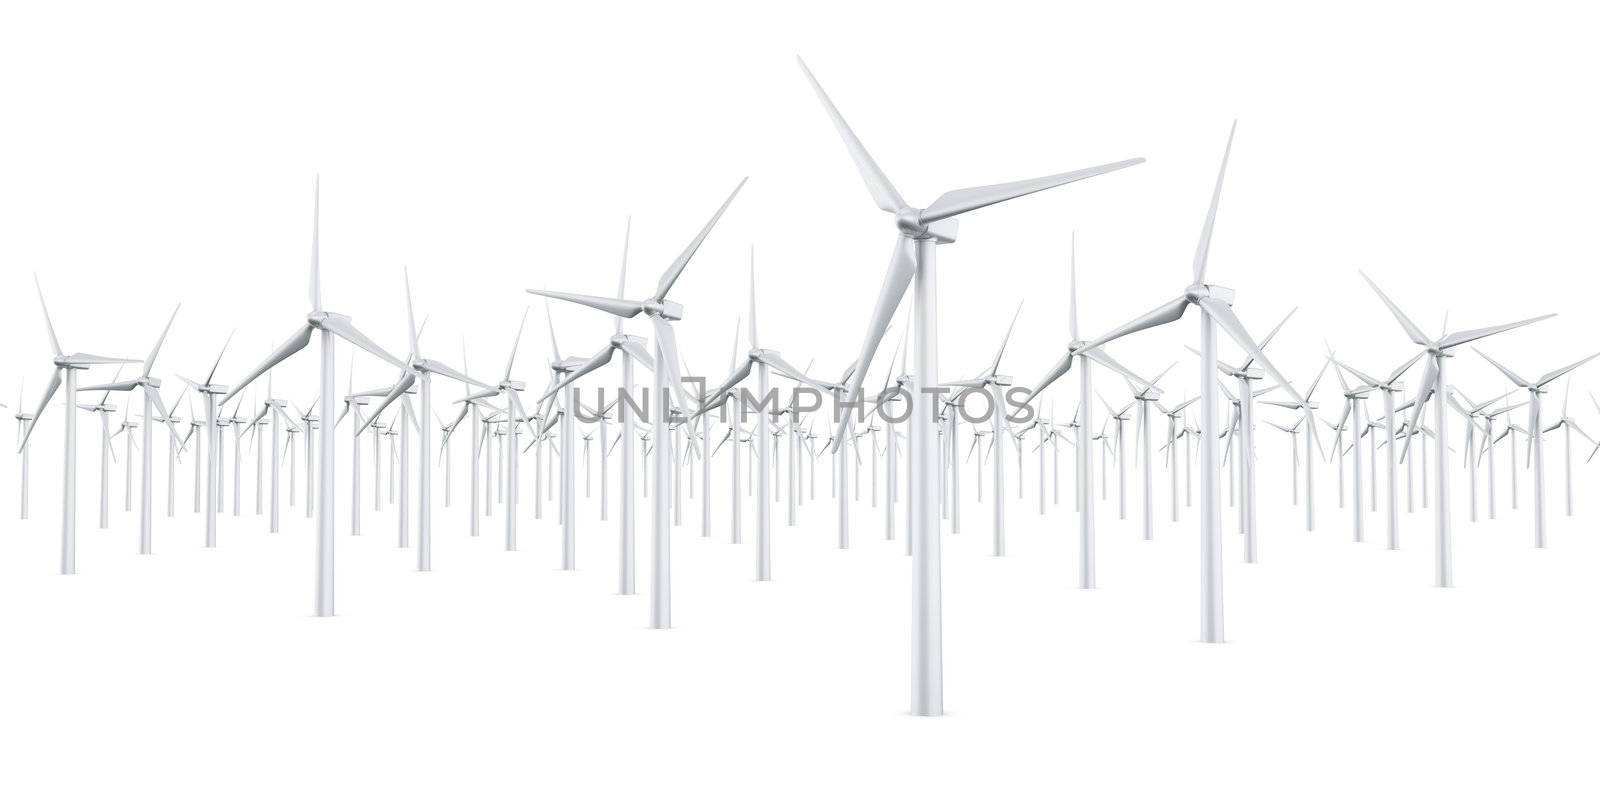 3d rendering of multiple wind turbines in a wite studio setup